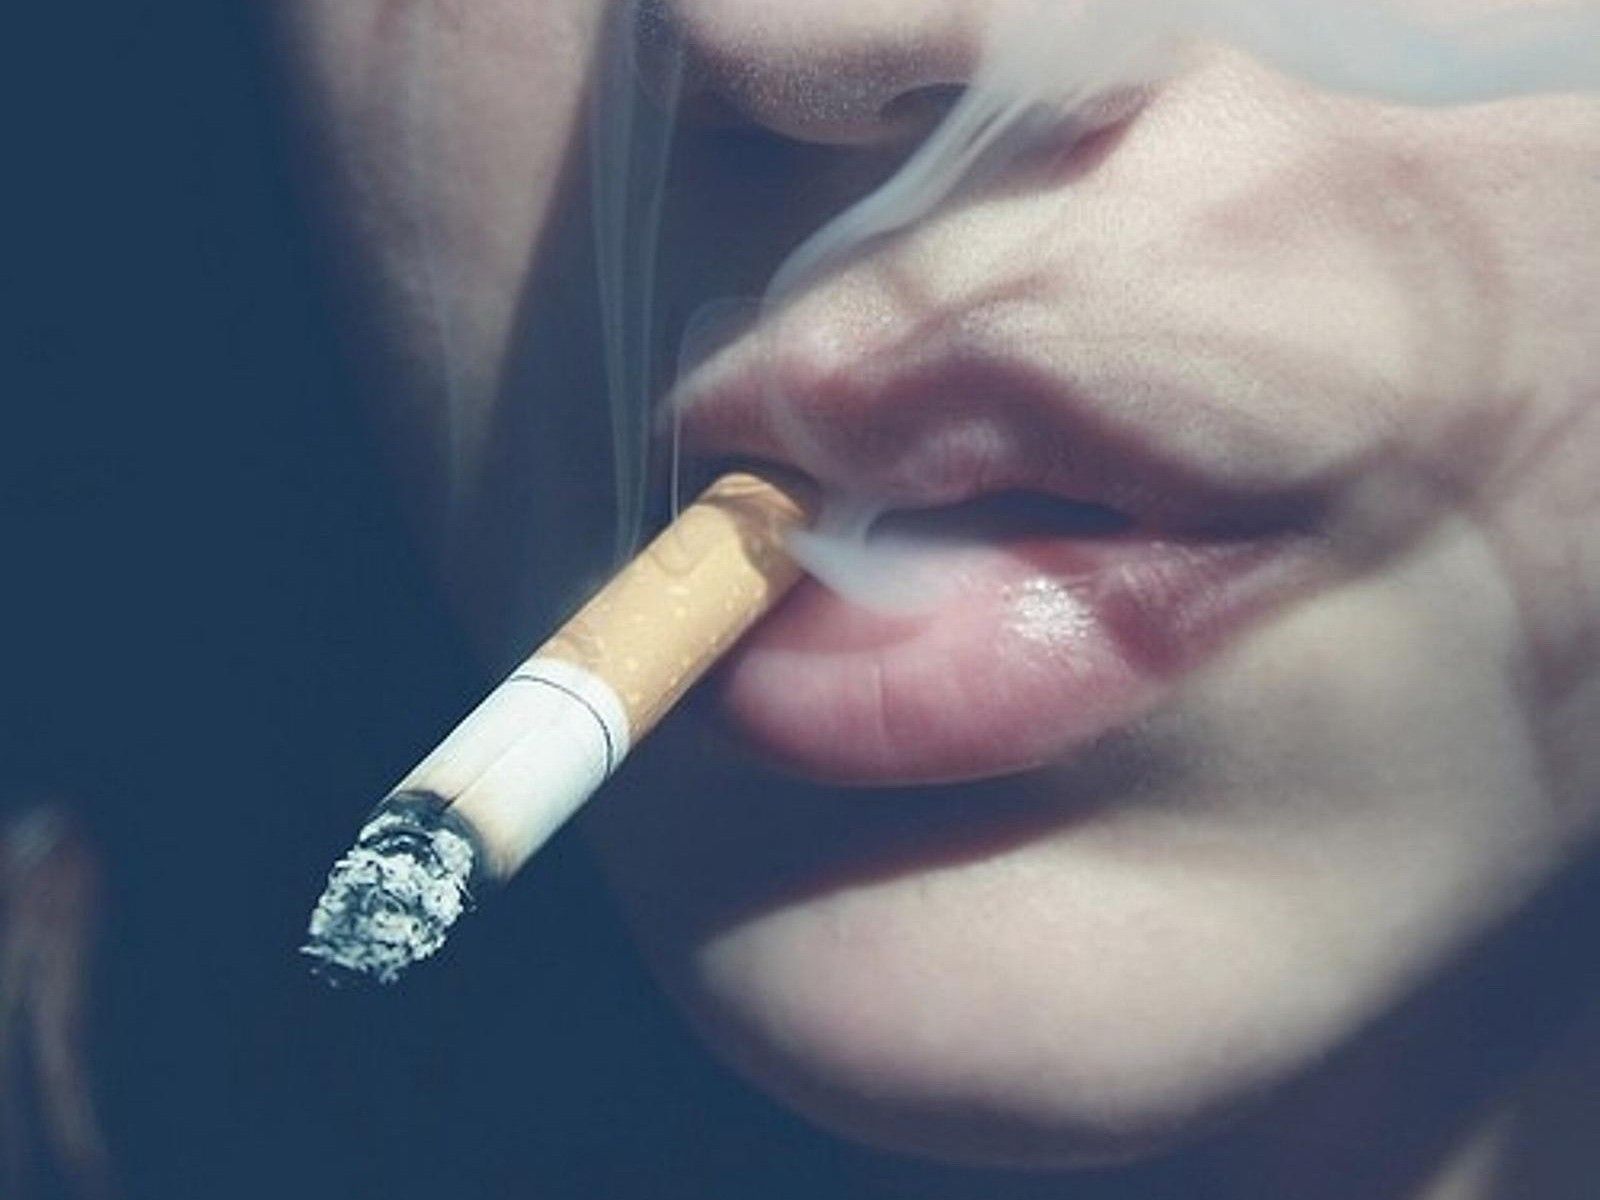 Smoking deep drags